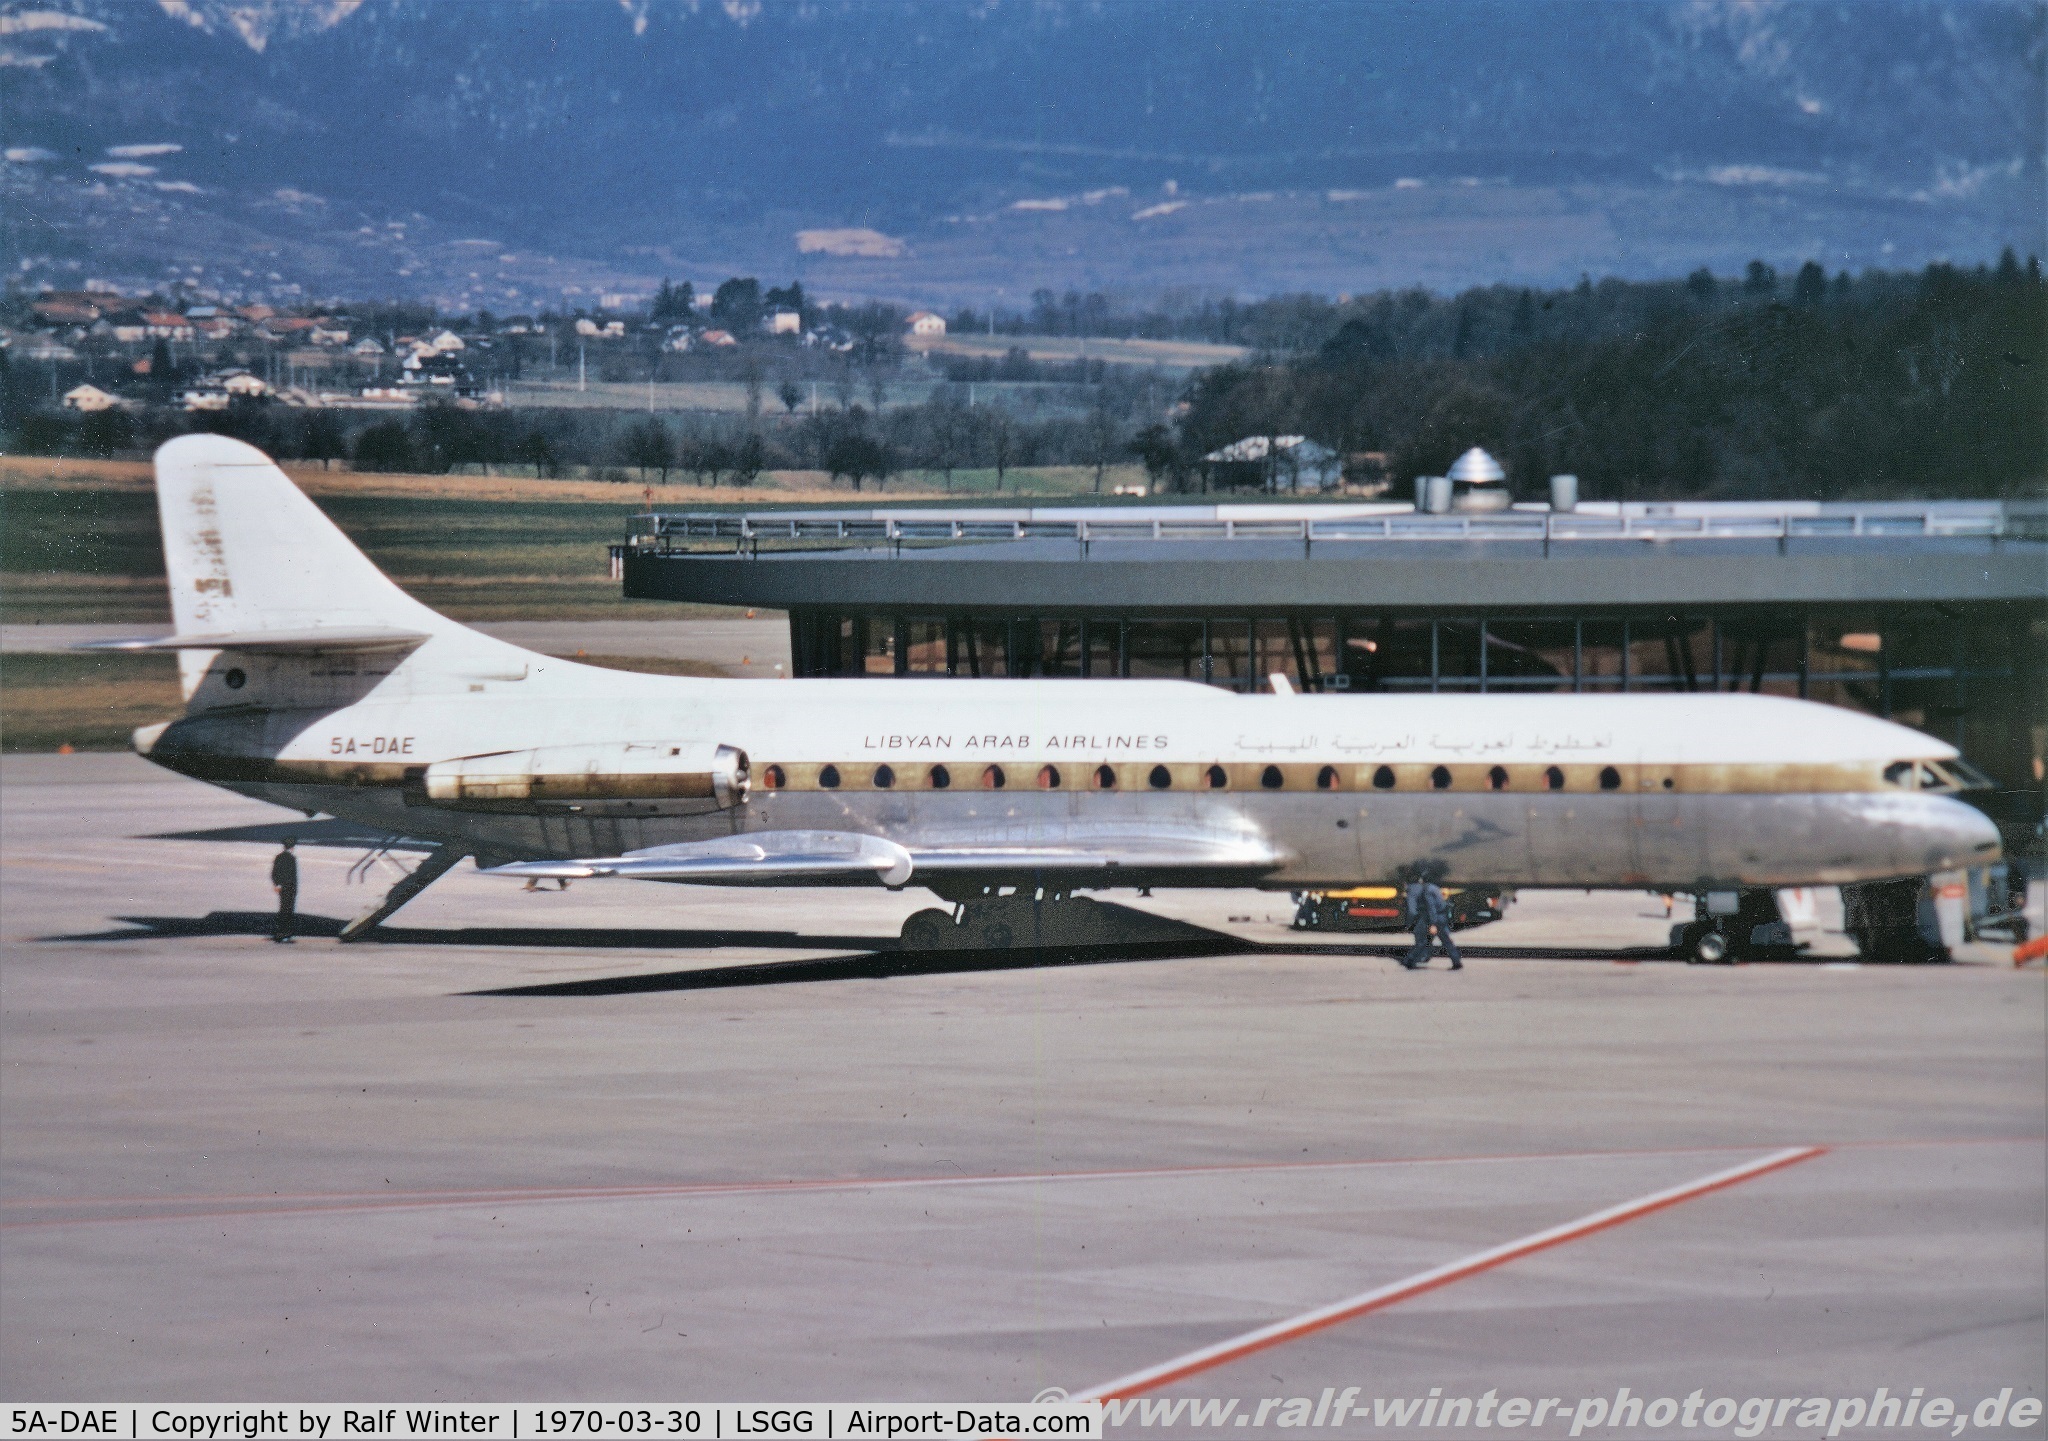 5A-DAE, 1967 Sud Aviation SE-210 Caravelle VI-R C/N 221, Sud Aviation SE-210 Caravelle VI-R - Lybian Arab Airlines - 221 - 5A-DAE - 30.03.1970 - LSGG